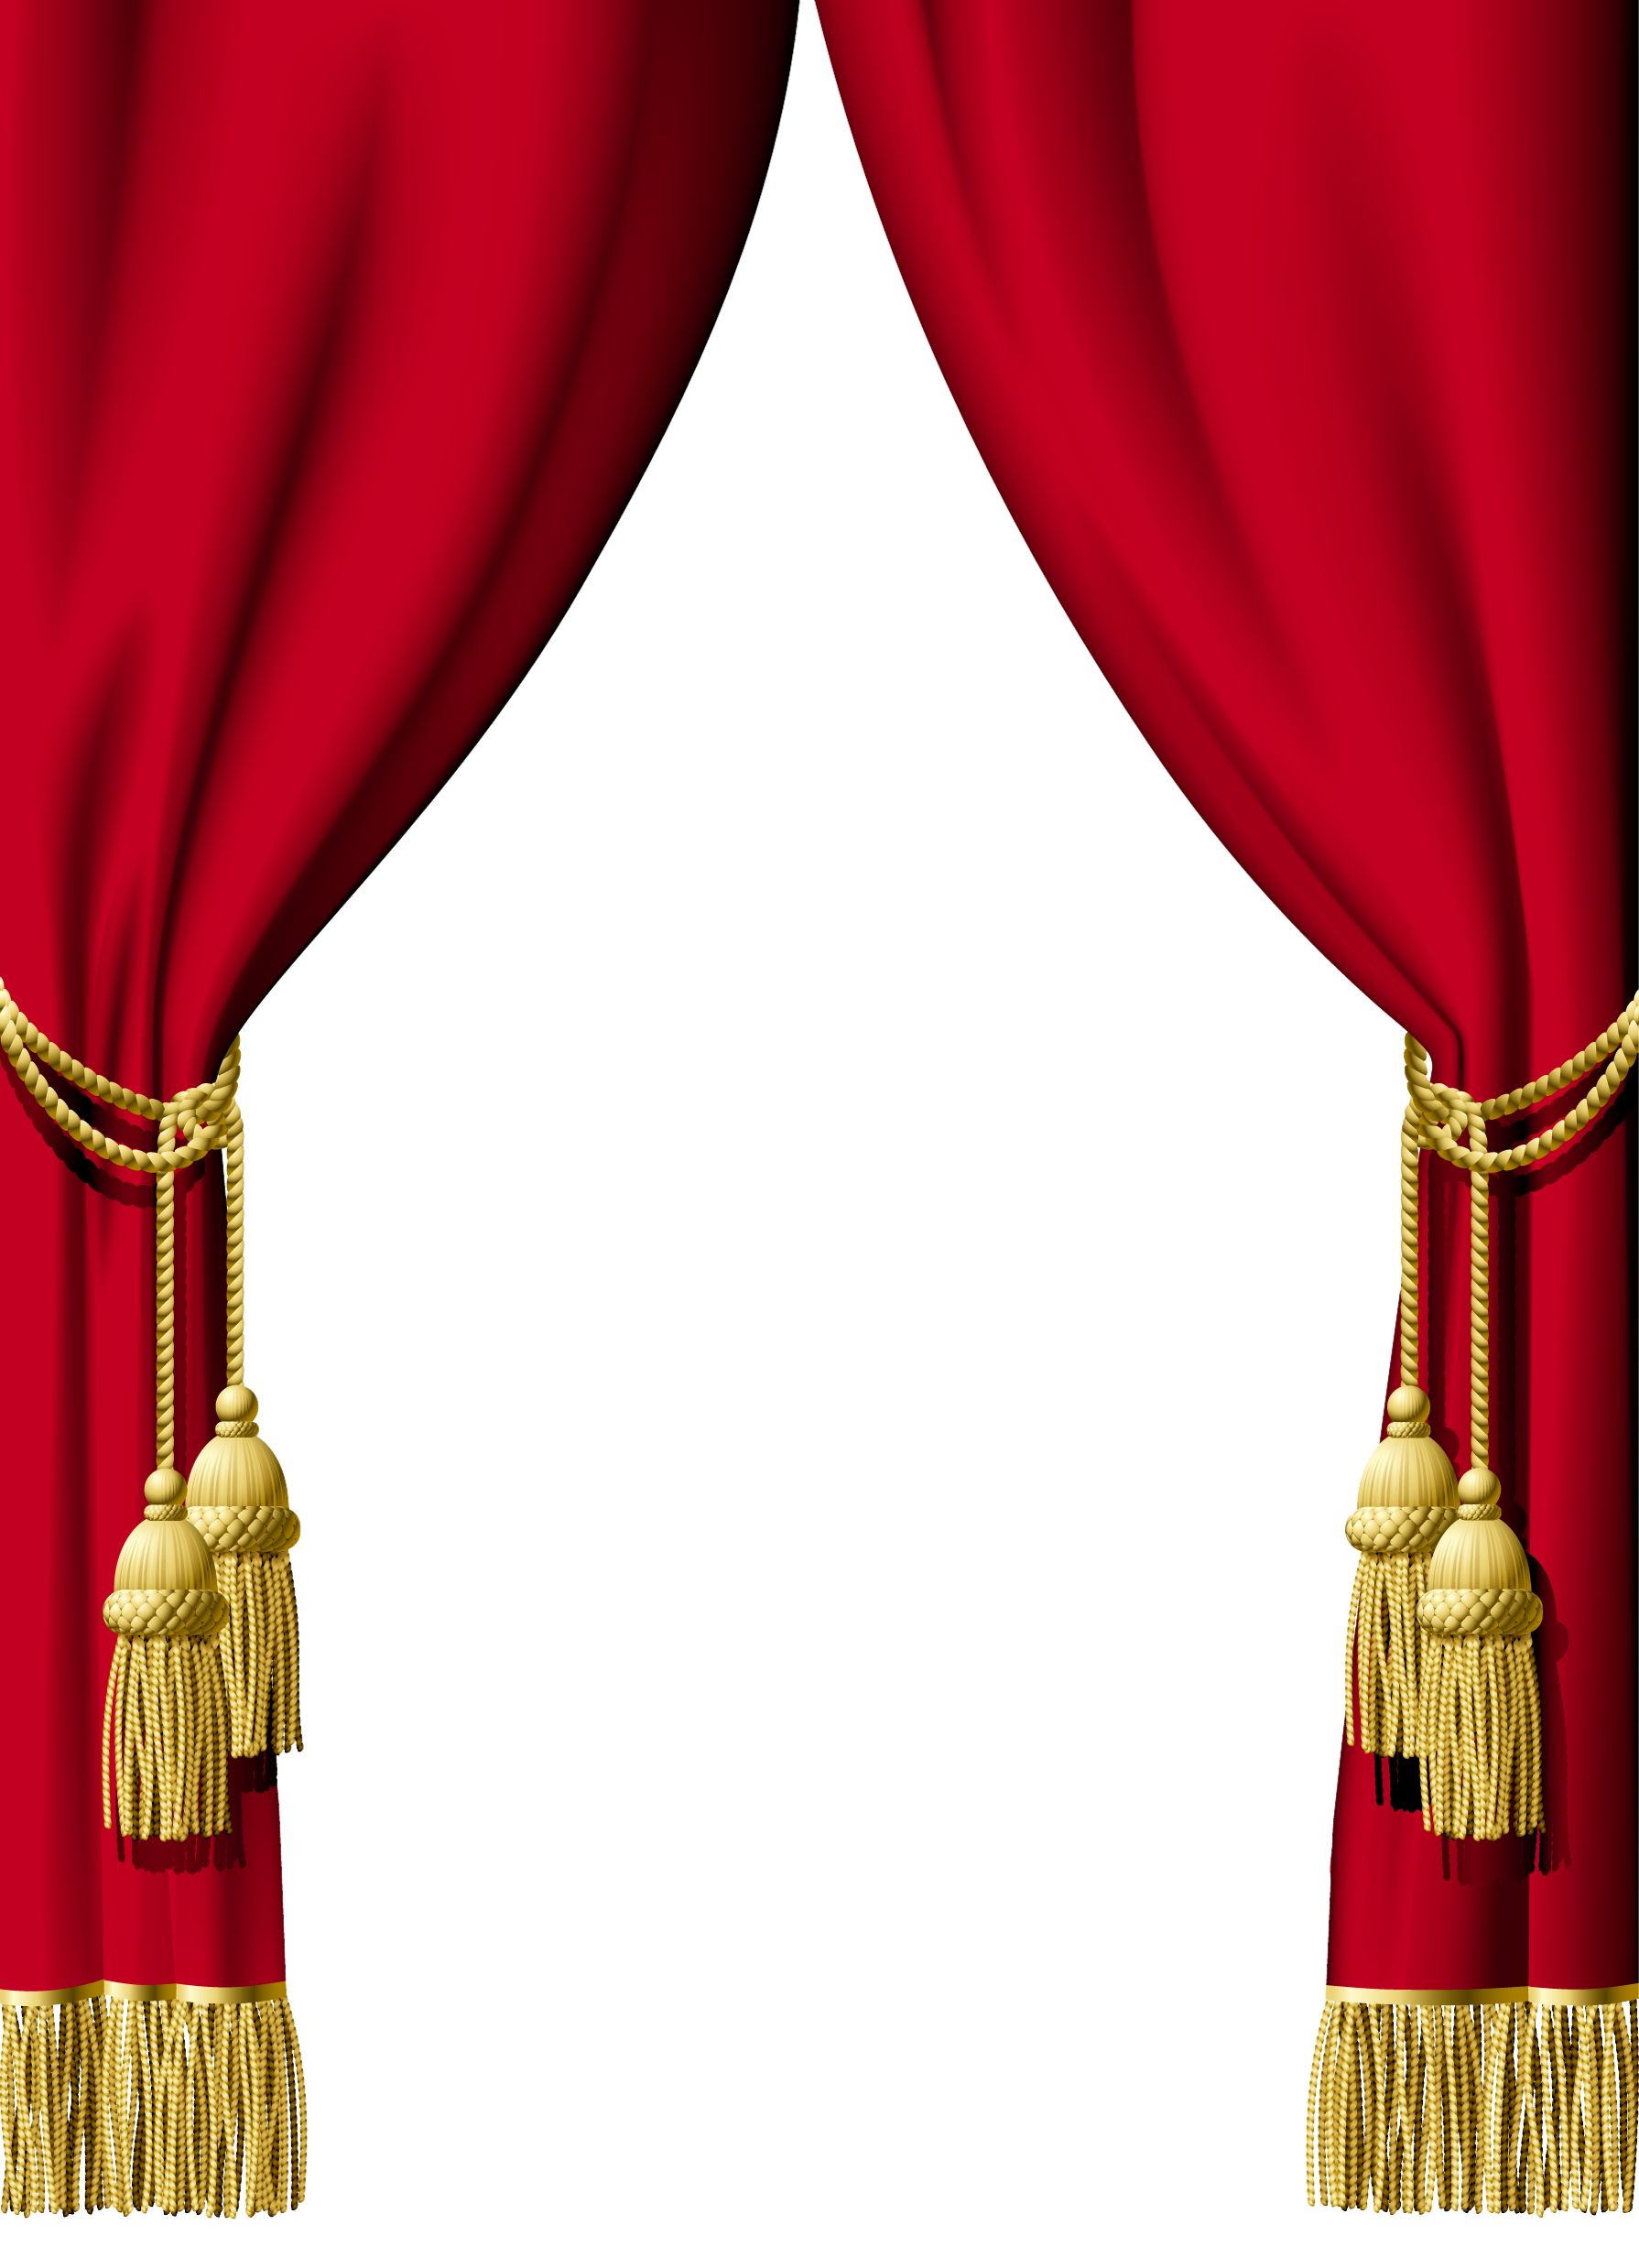 Drama red curtain